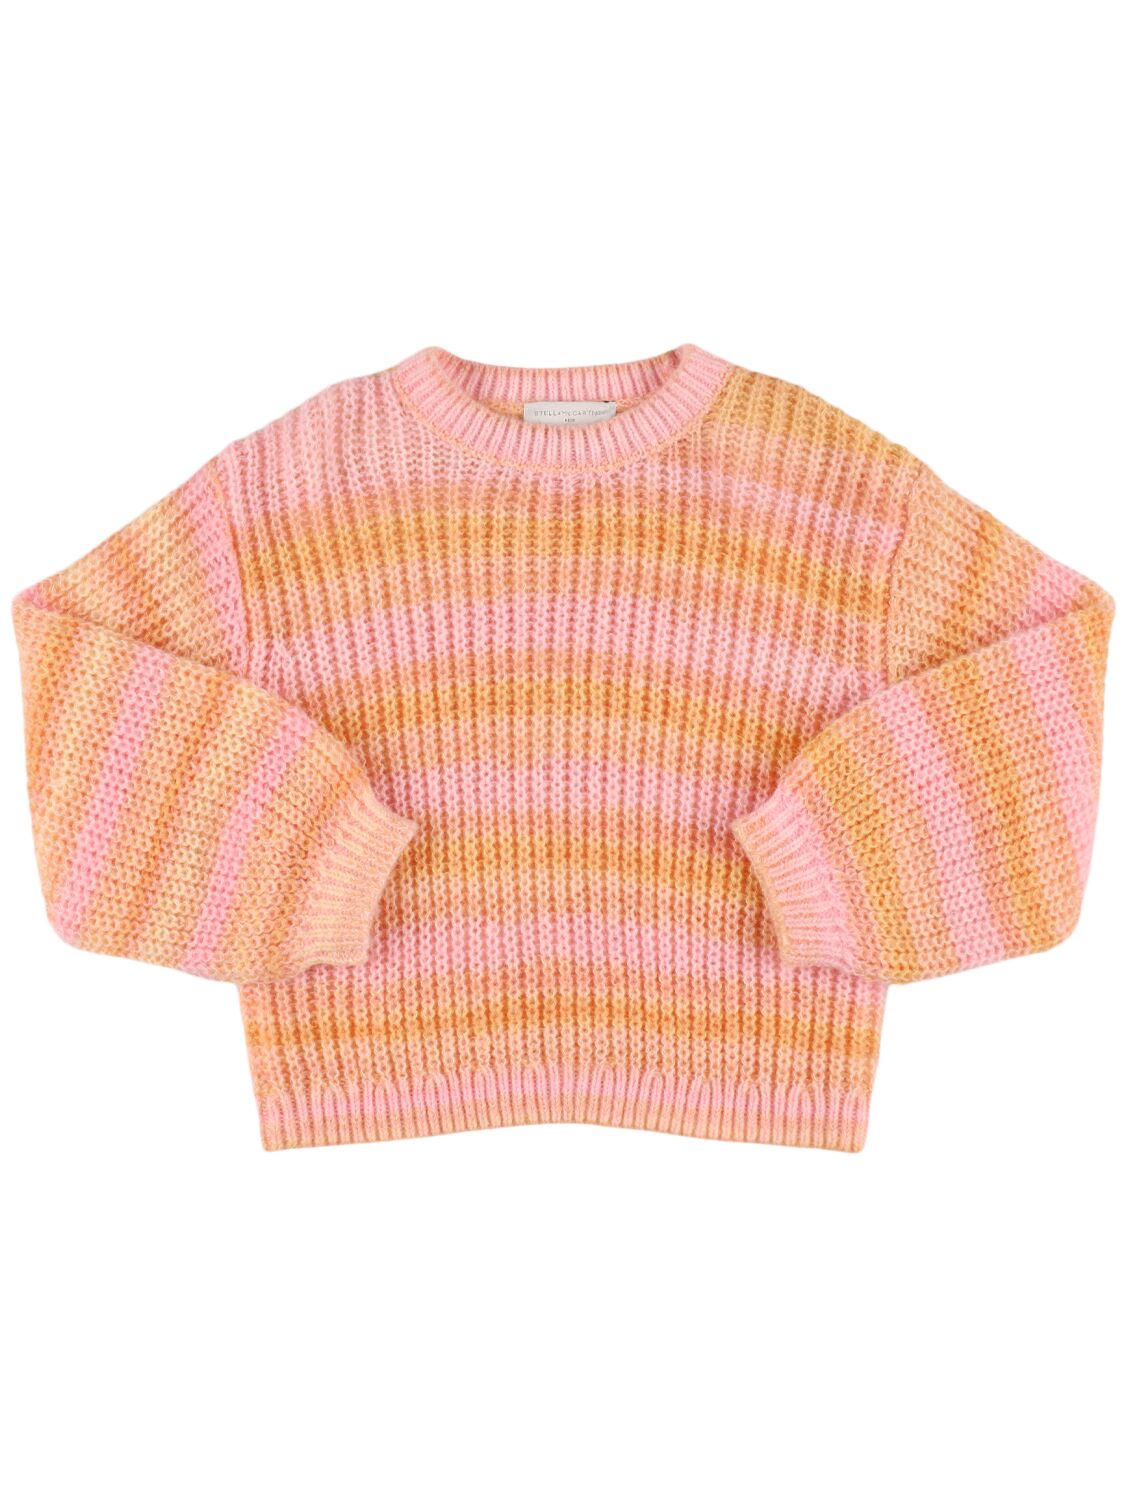 Stella Mccartney Striped Knit Sweater In Pink/multi